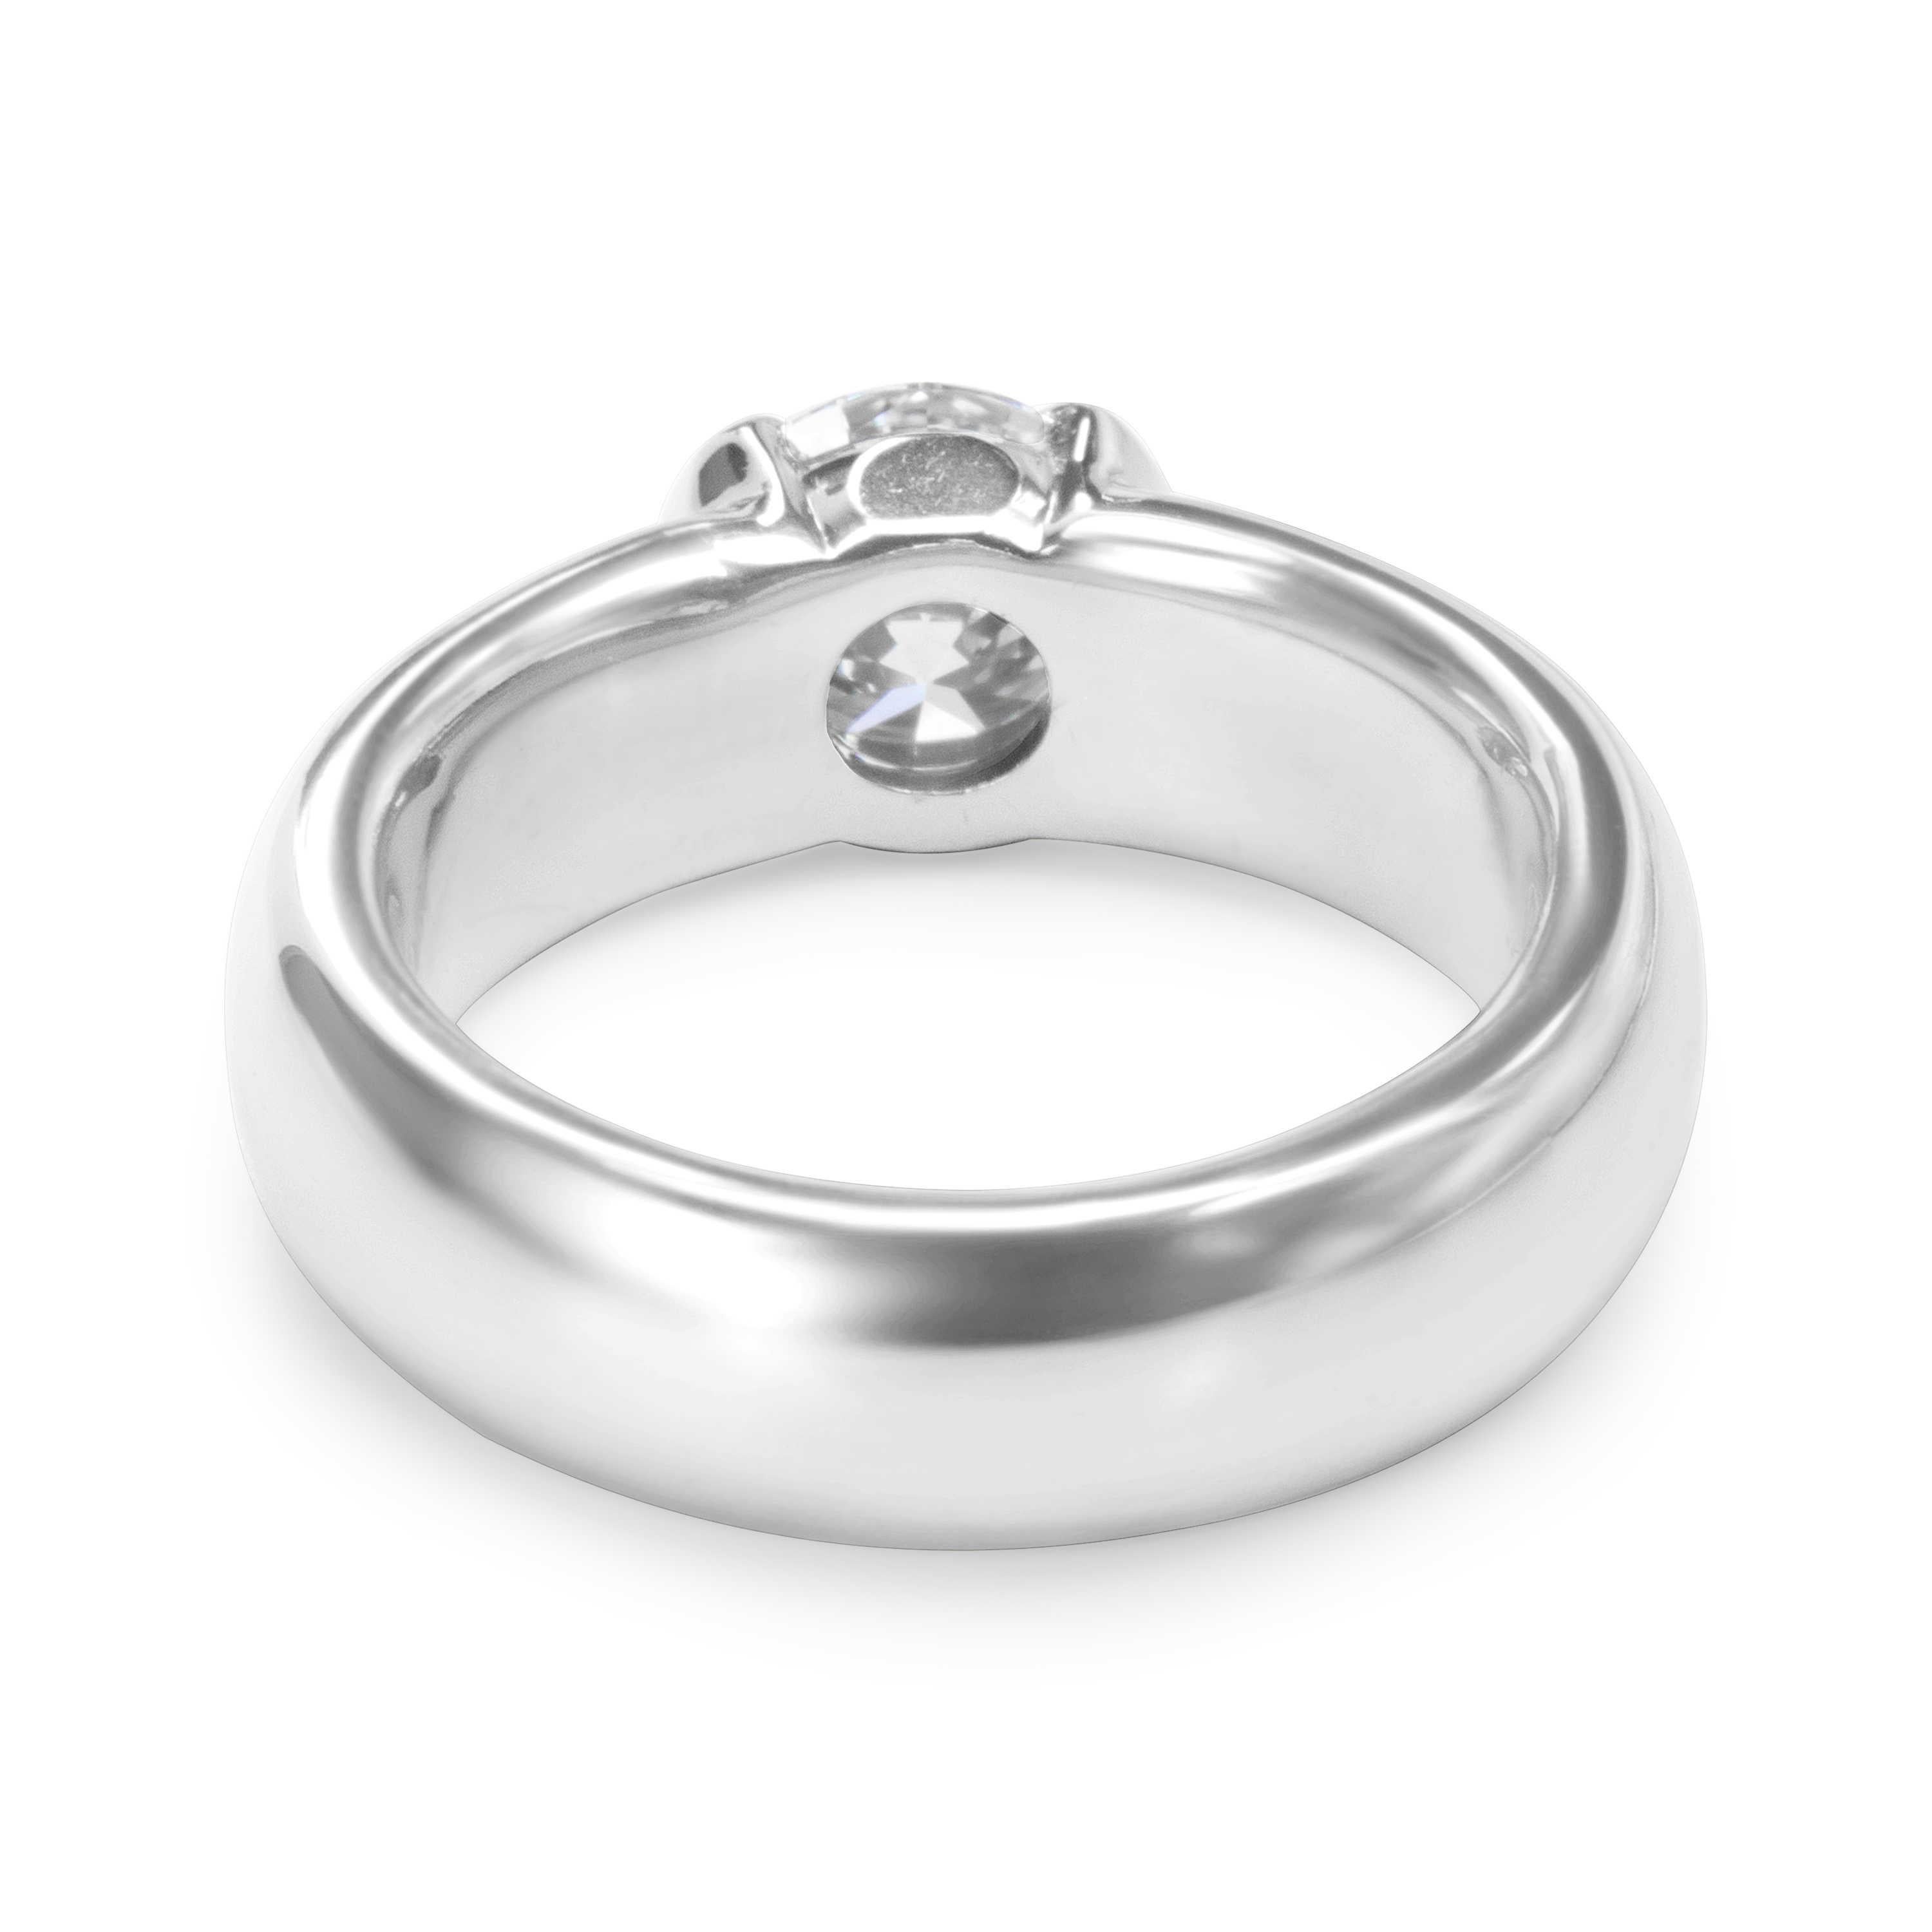 Women's Tiffany & Co. Etoile Solitaire Diamond Engagement Ring in Platinum 1.07 Carat